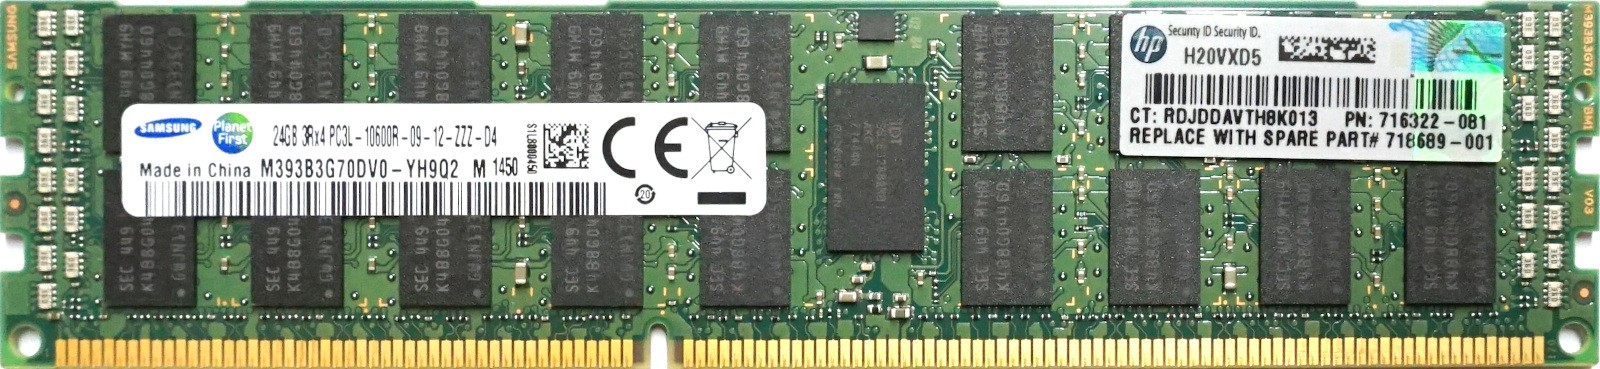 716322-081 HP (716322-081) - 24GB PC3L-10600R (DDR3 Low-Power-1333MHz, 3RX4)